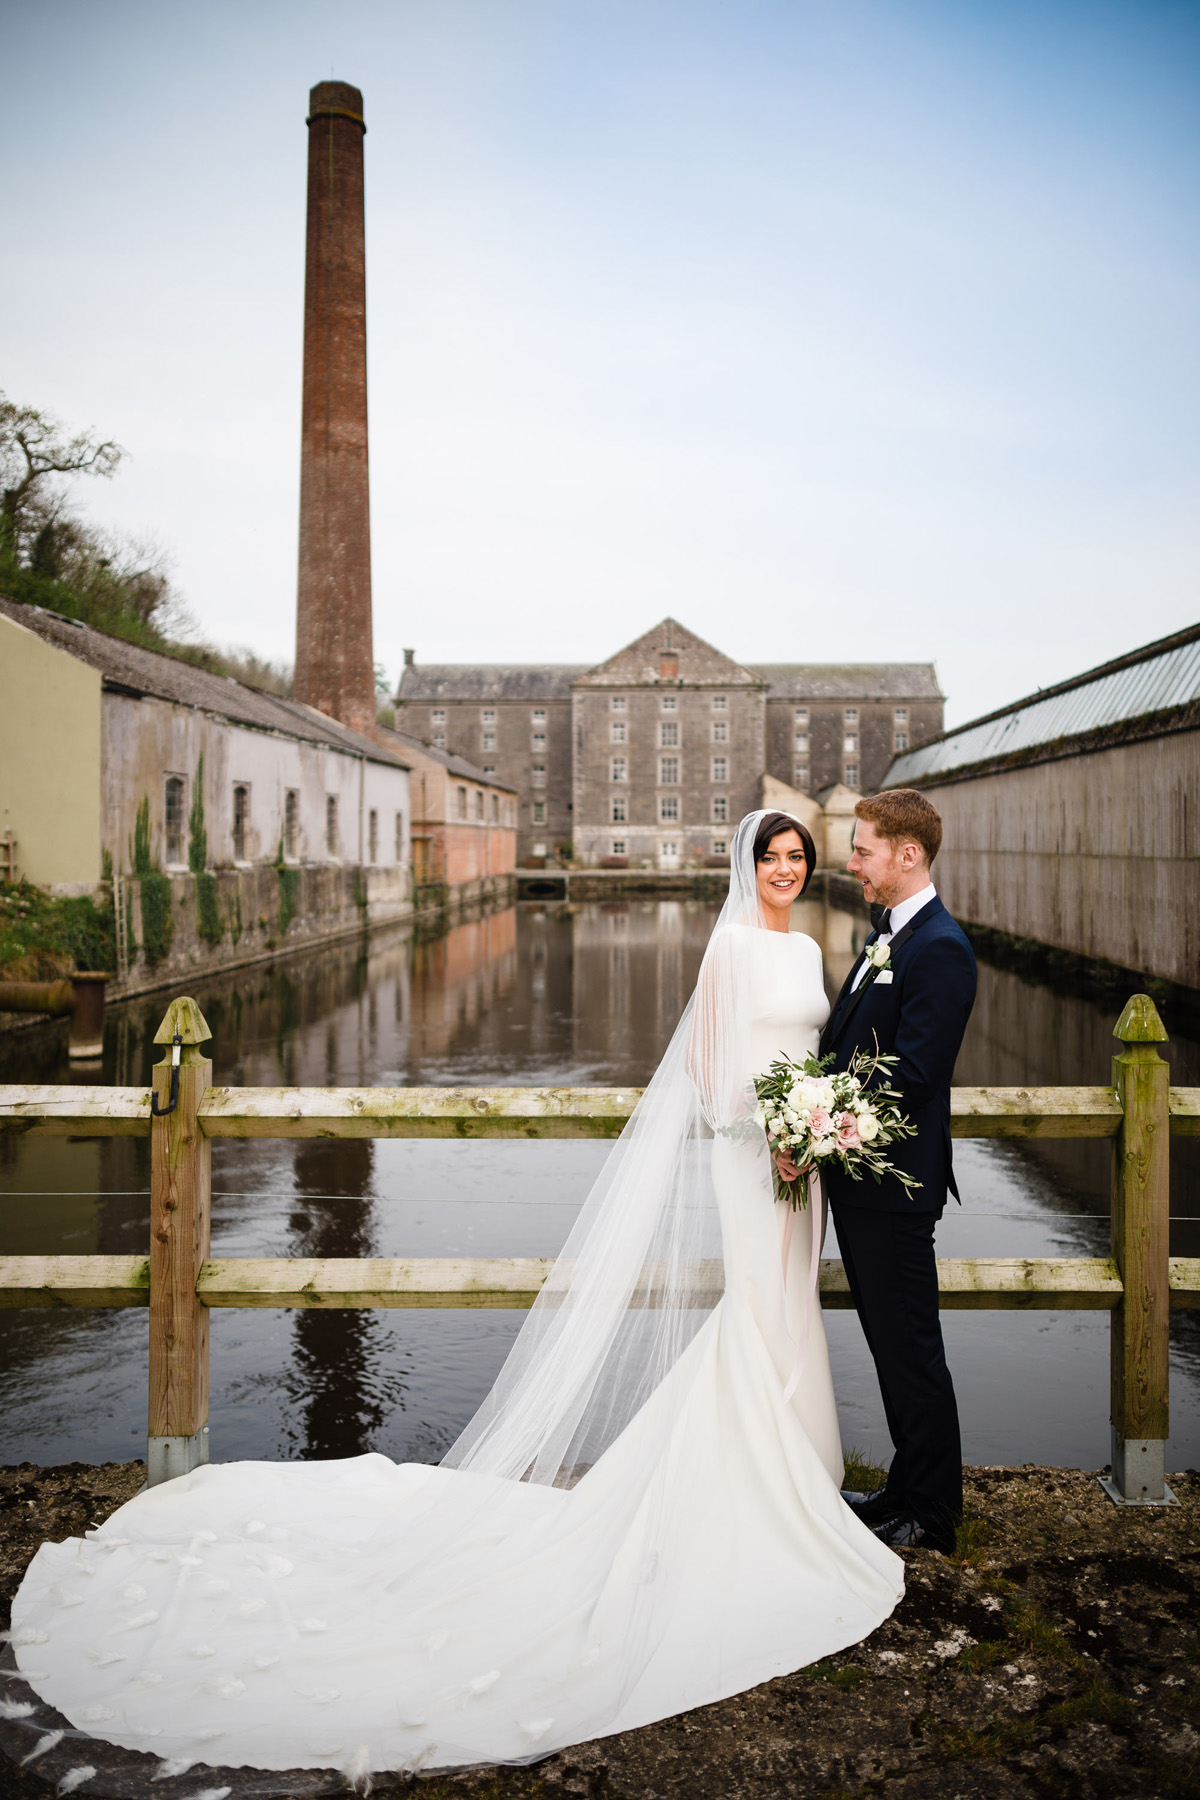 163 Millhouse Wedding In Ireland Atelier Pronovias